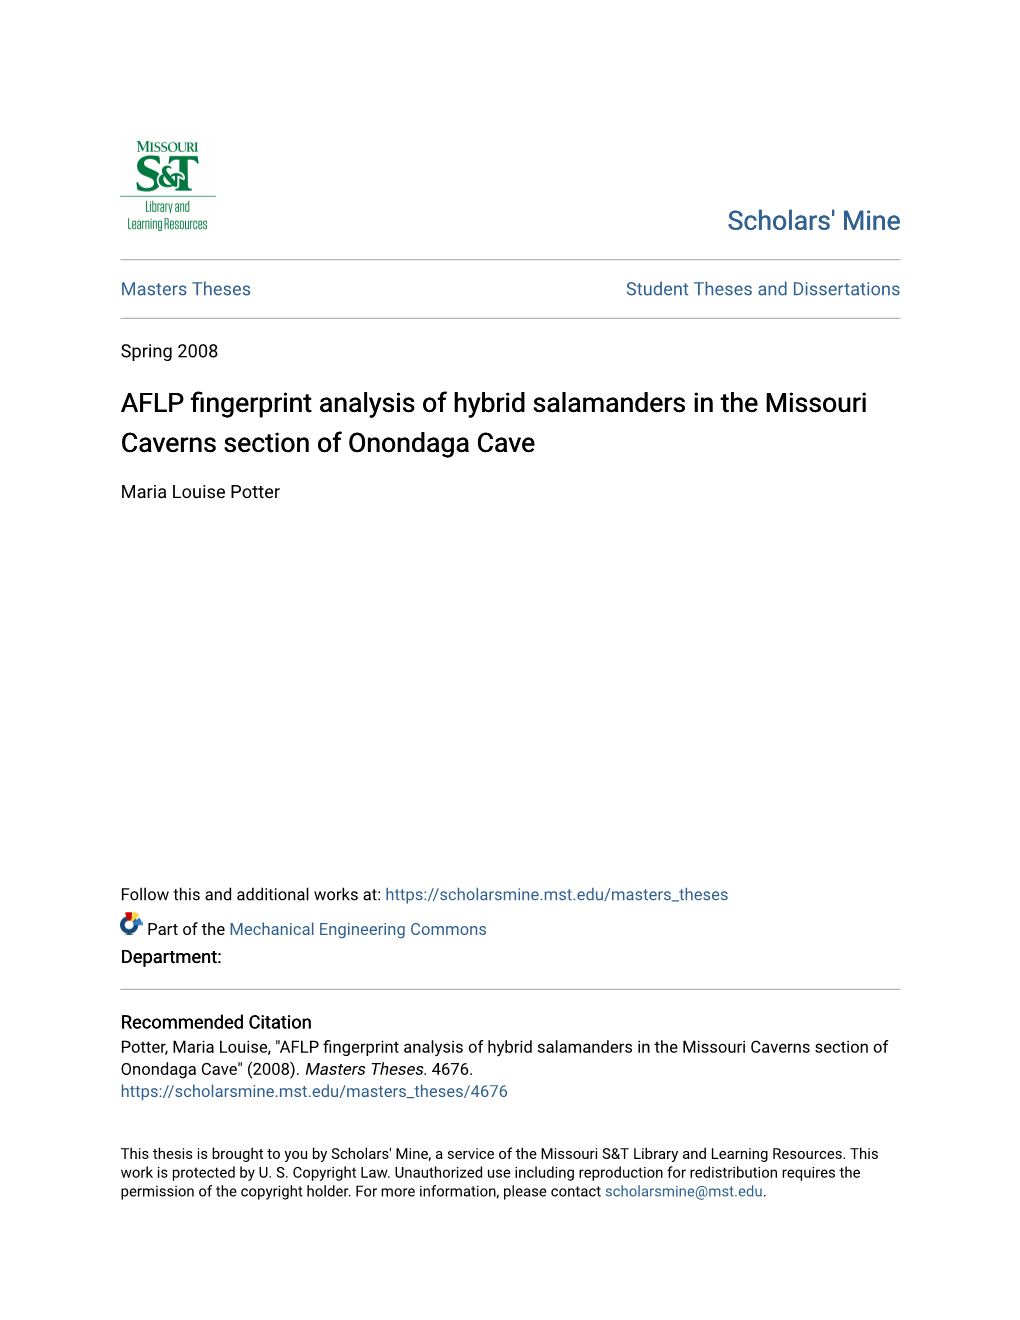 AFLP Fingerprint Analysis of Hybrid Salamanders in the Missouri Caverns Section of Onondaga Cave